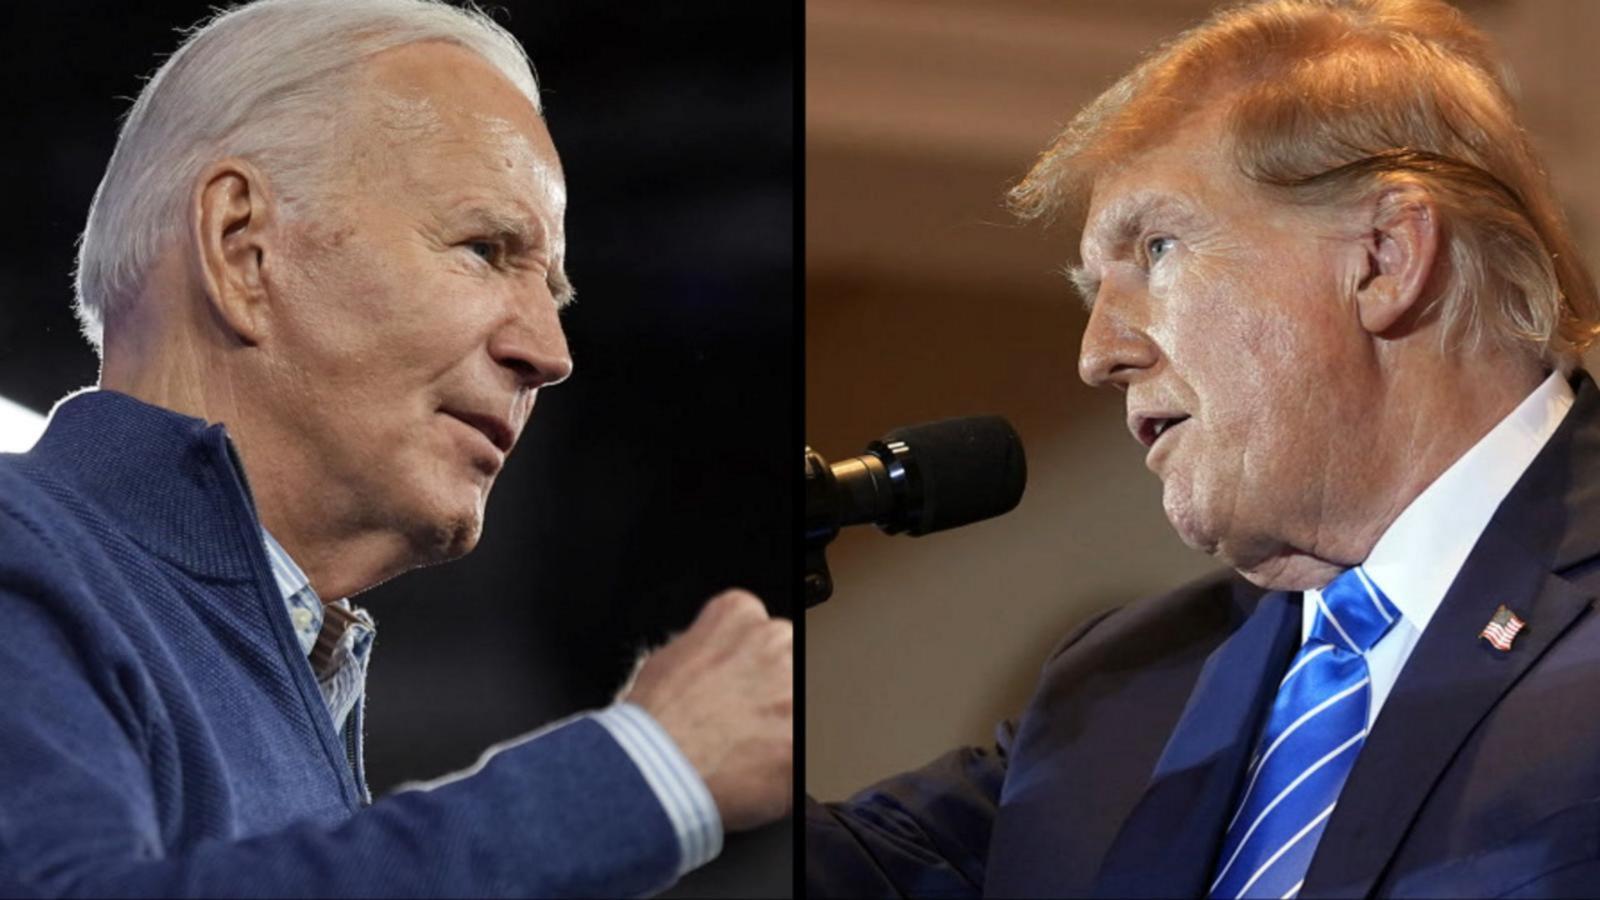 VIDEO: Trump vs. Biden: The rematch begins